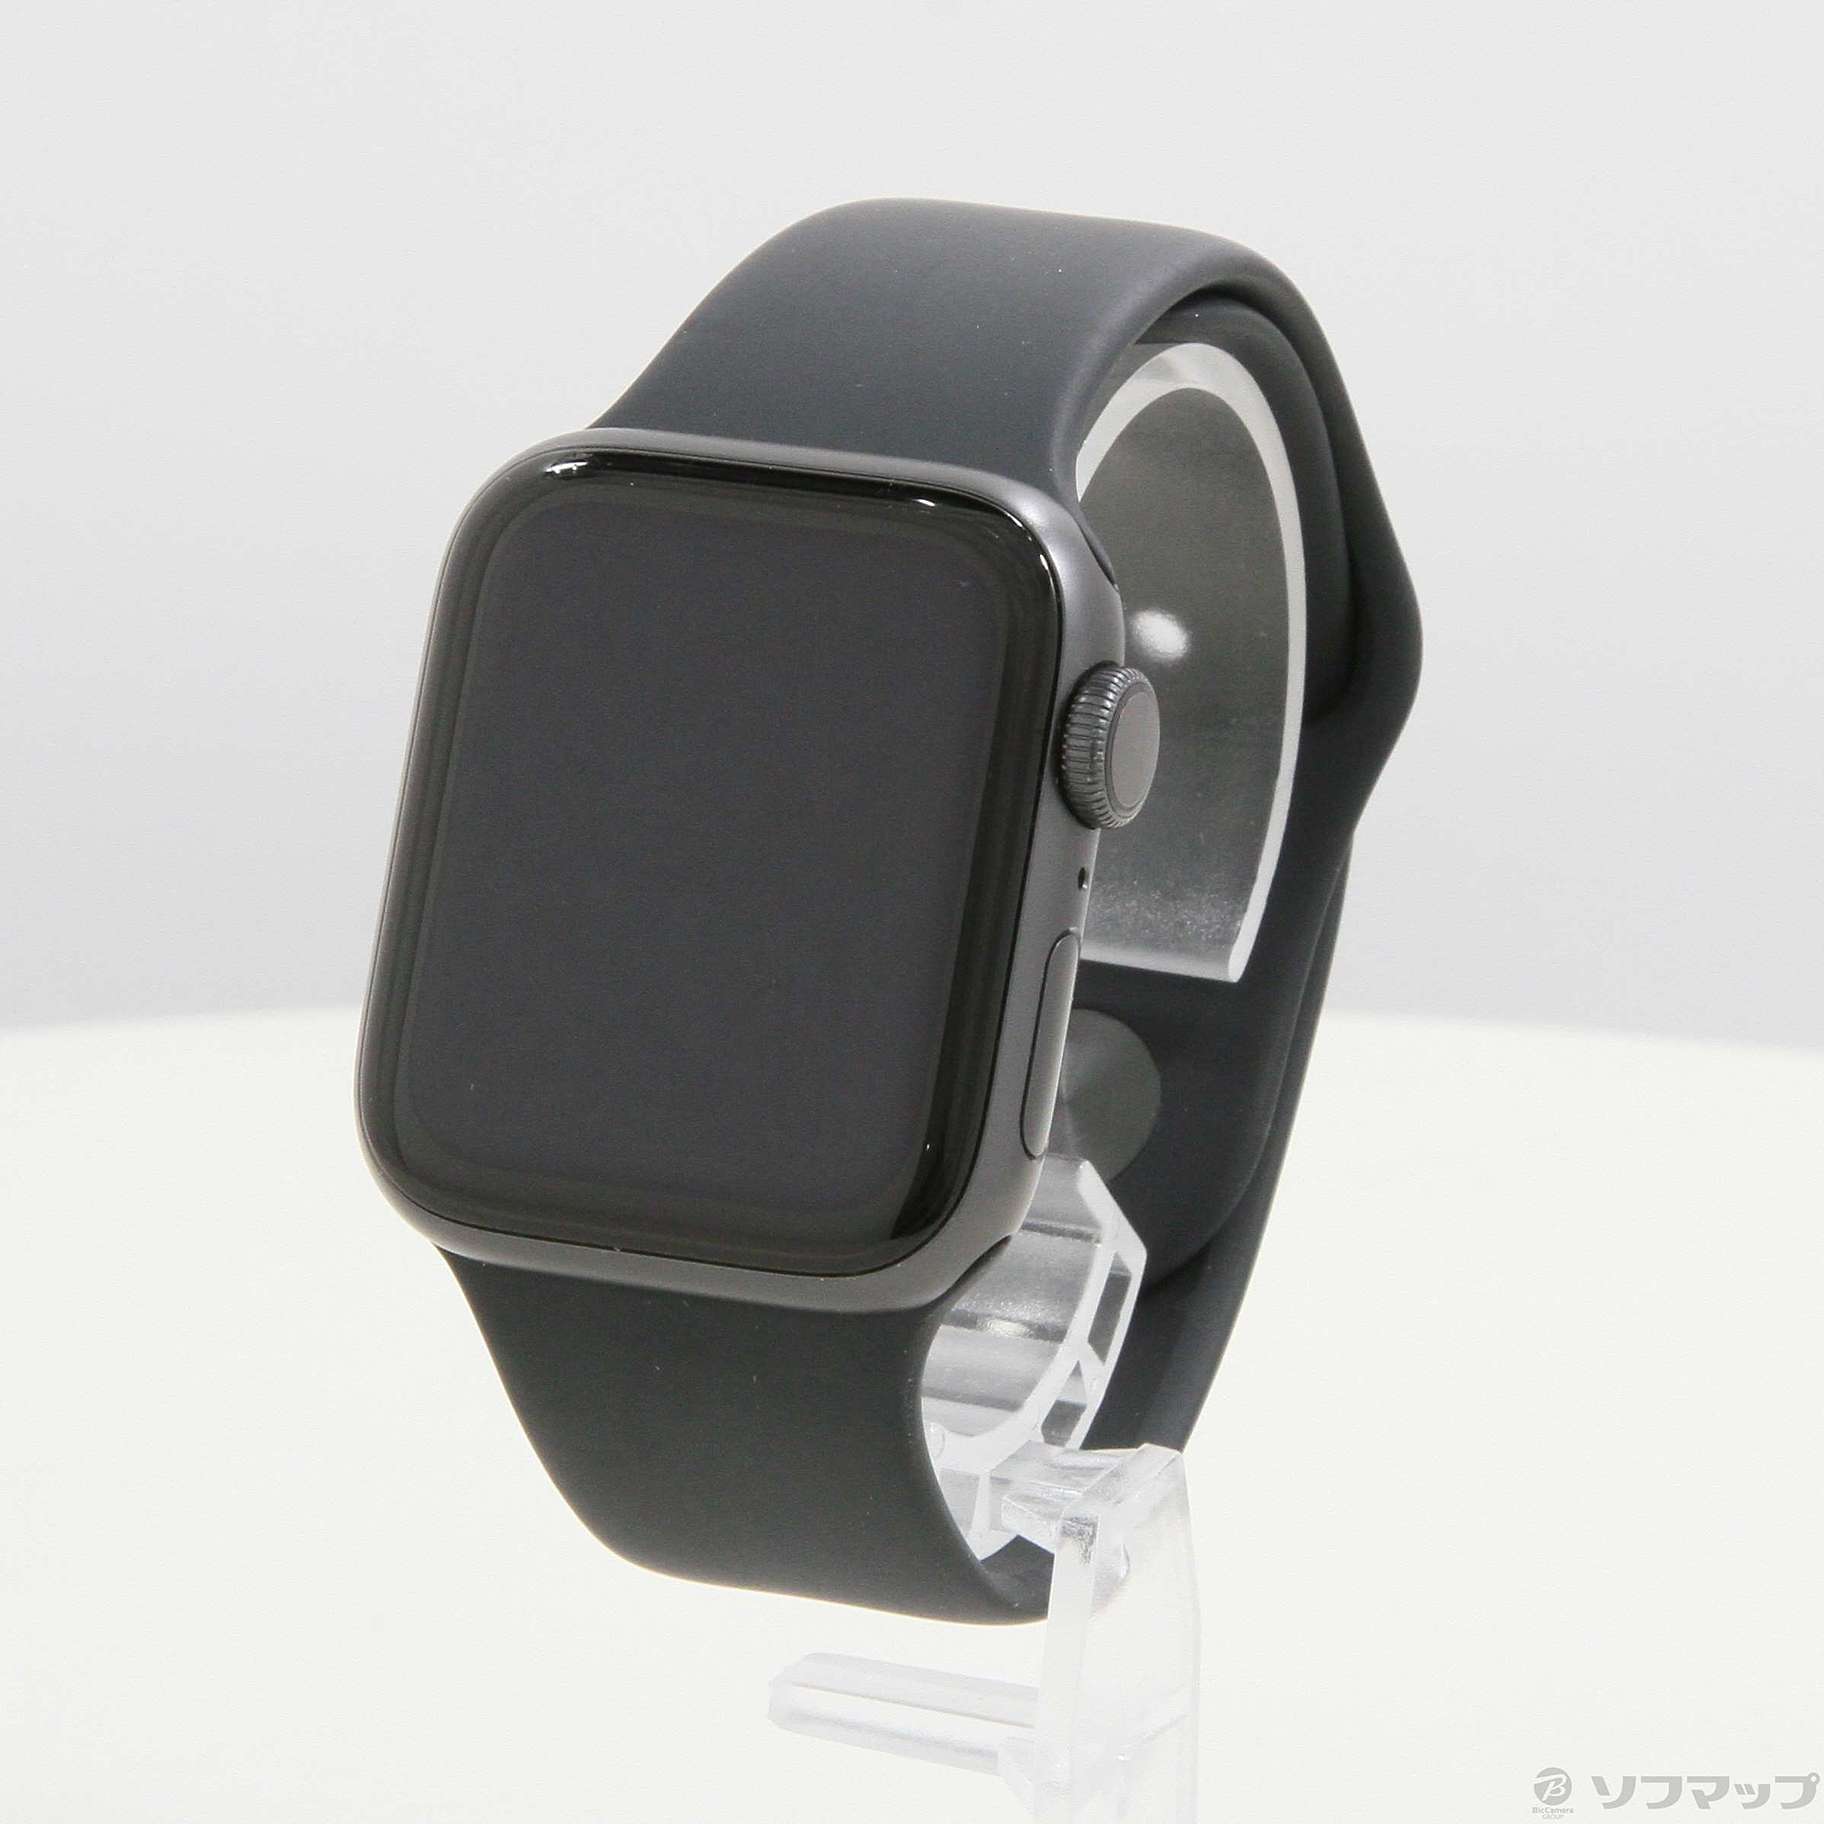 Apple Watch Series 6 GPS 40mmスペースグレイ